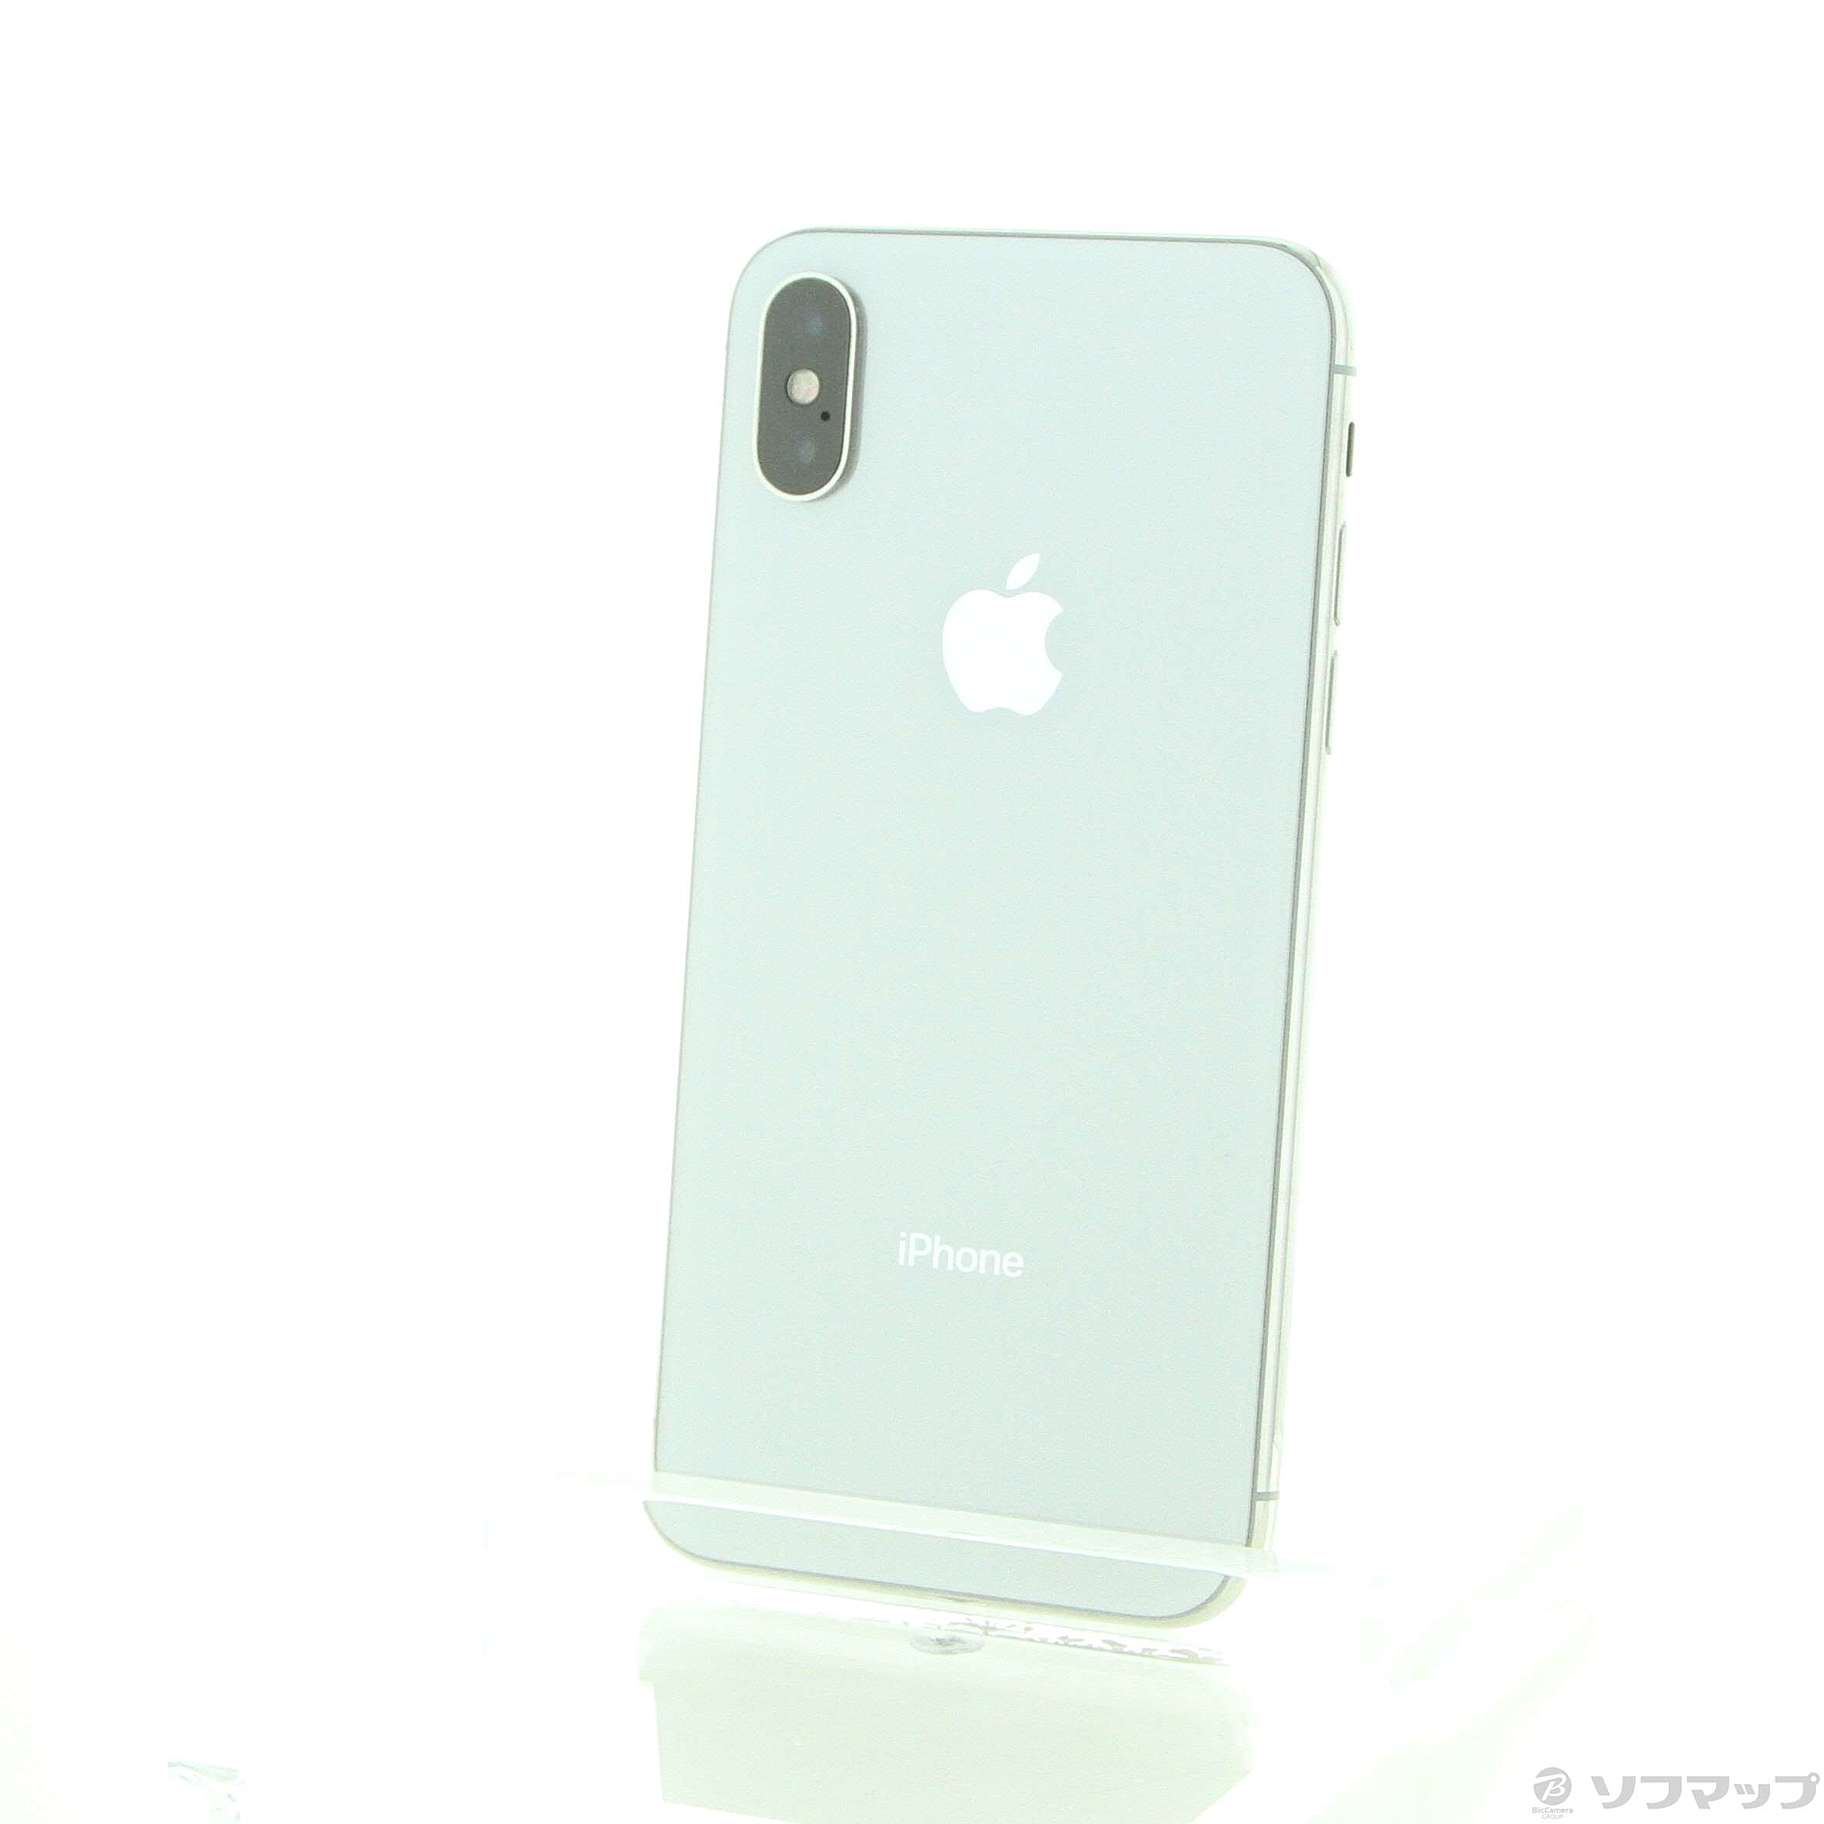 iPhoneX 256GB シルバー SIMフリー - スマートフォン本体